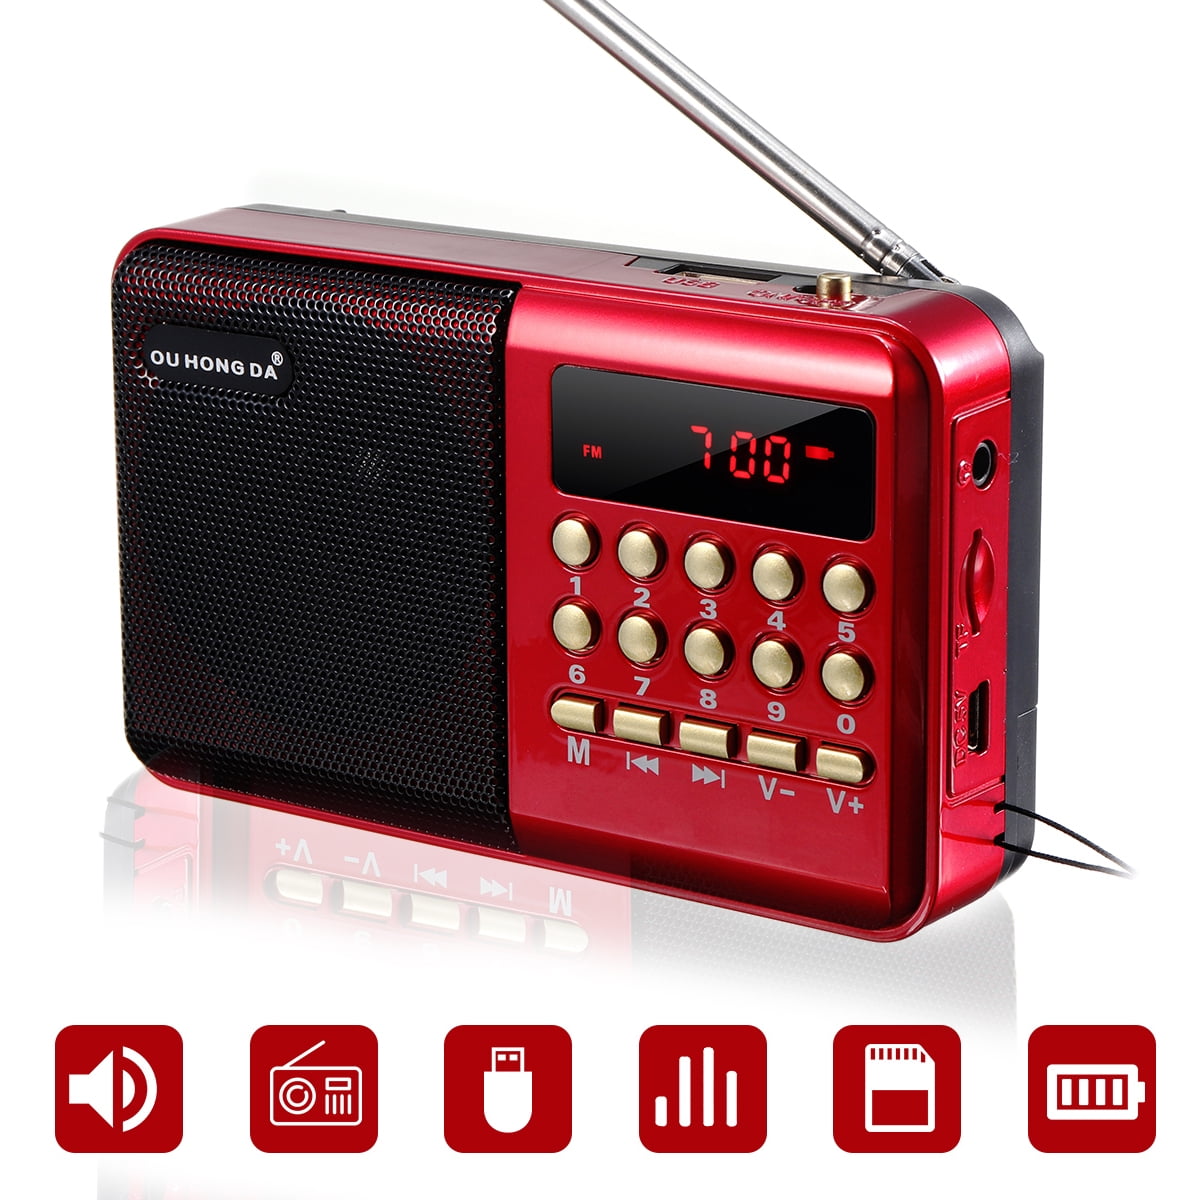 Mini Radio Portable FM Pocket Radio Handy Digital Radio Battery Operated  with Big Speaker MP3 TF USB Rechargeable Headphone Jack Function, Christmas